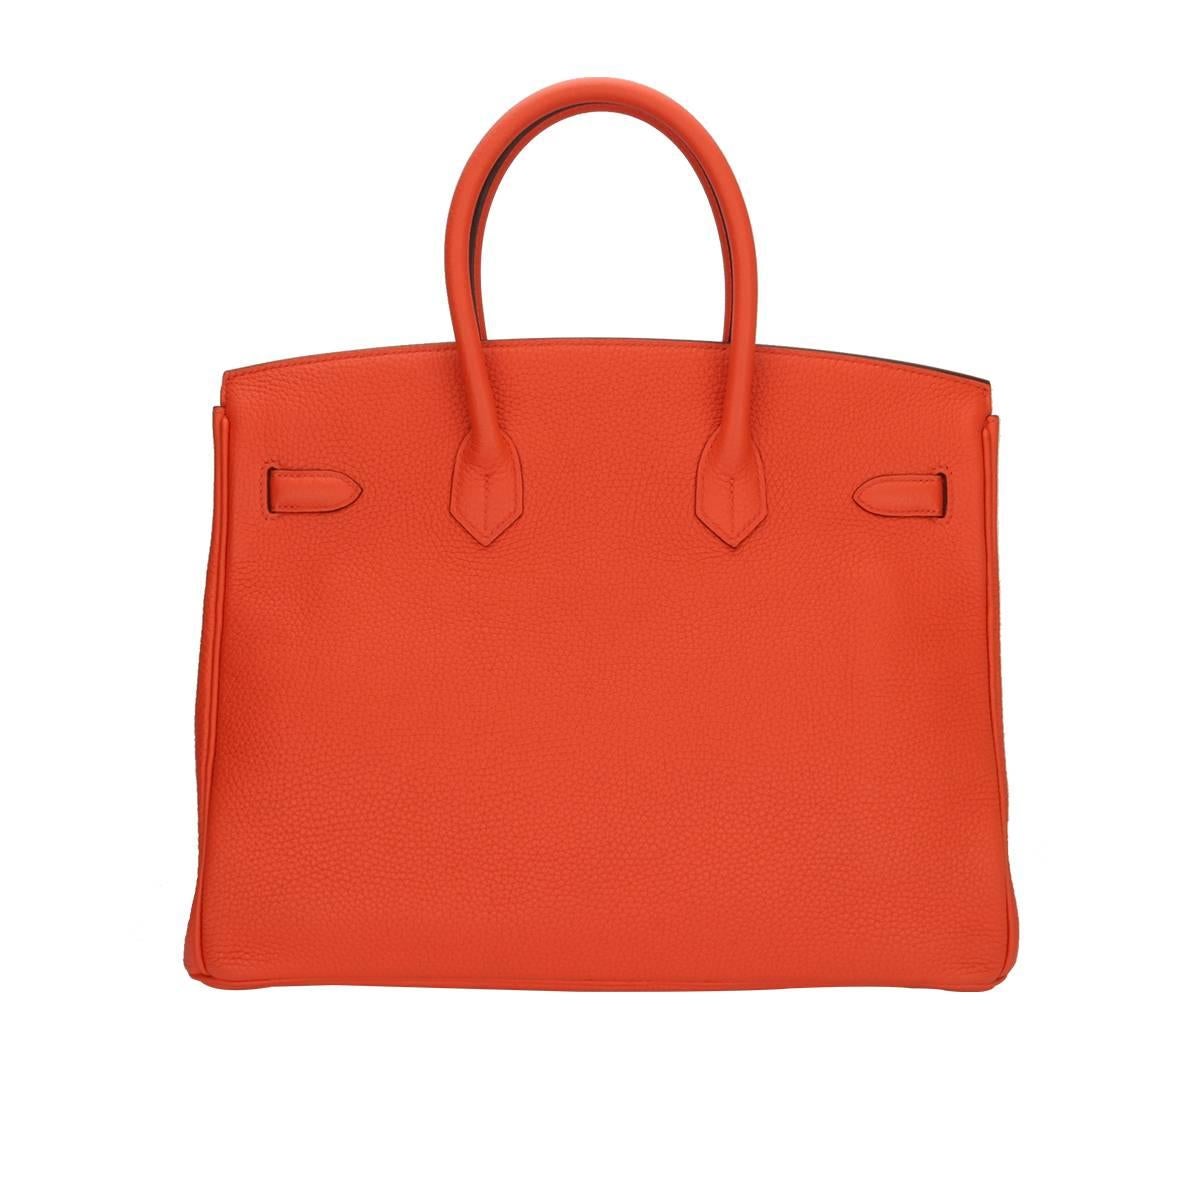 Red Hermès 35cm Orange Togo Leather with Gold Hardware Stamp T Year 2015 Birkin Bag